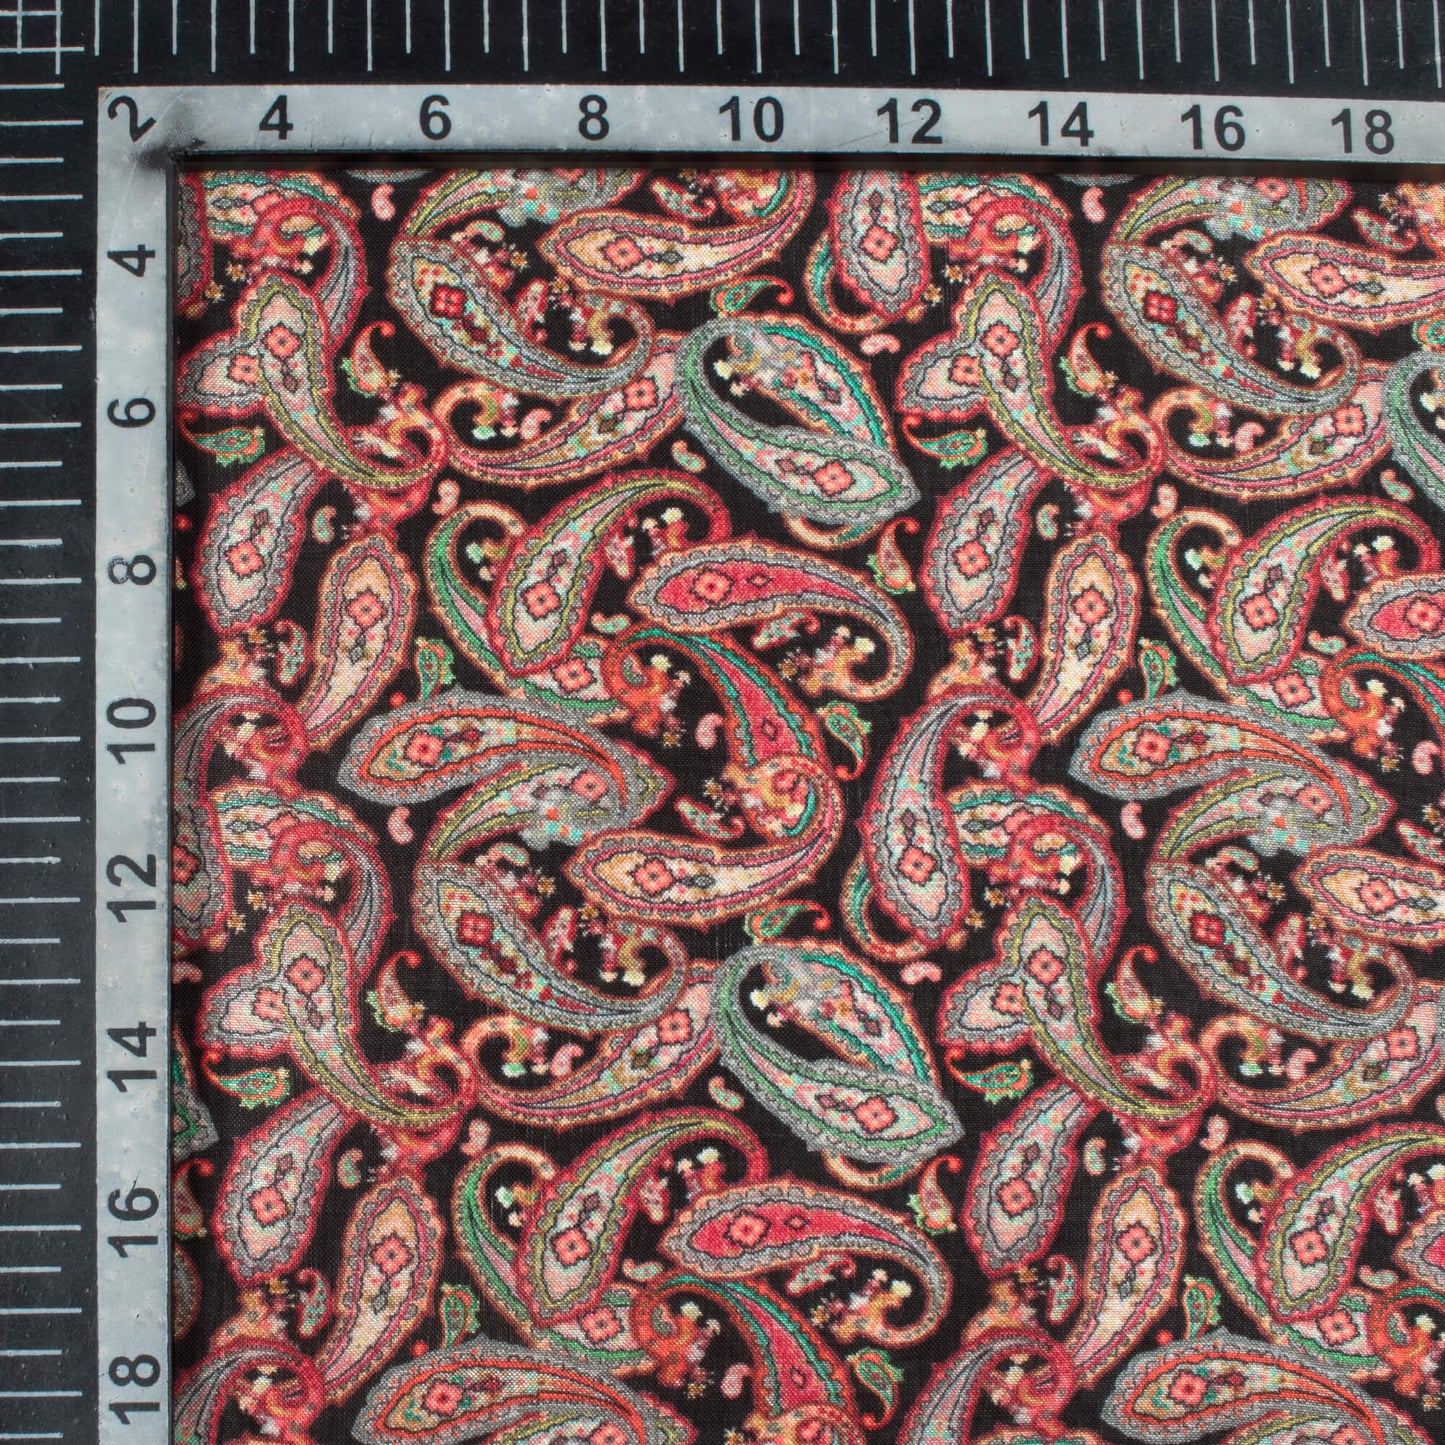 Black And Dark Pink Paisley Pattern Digital Print Viscose Uppada Silk Fabric